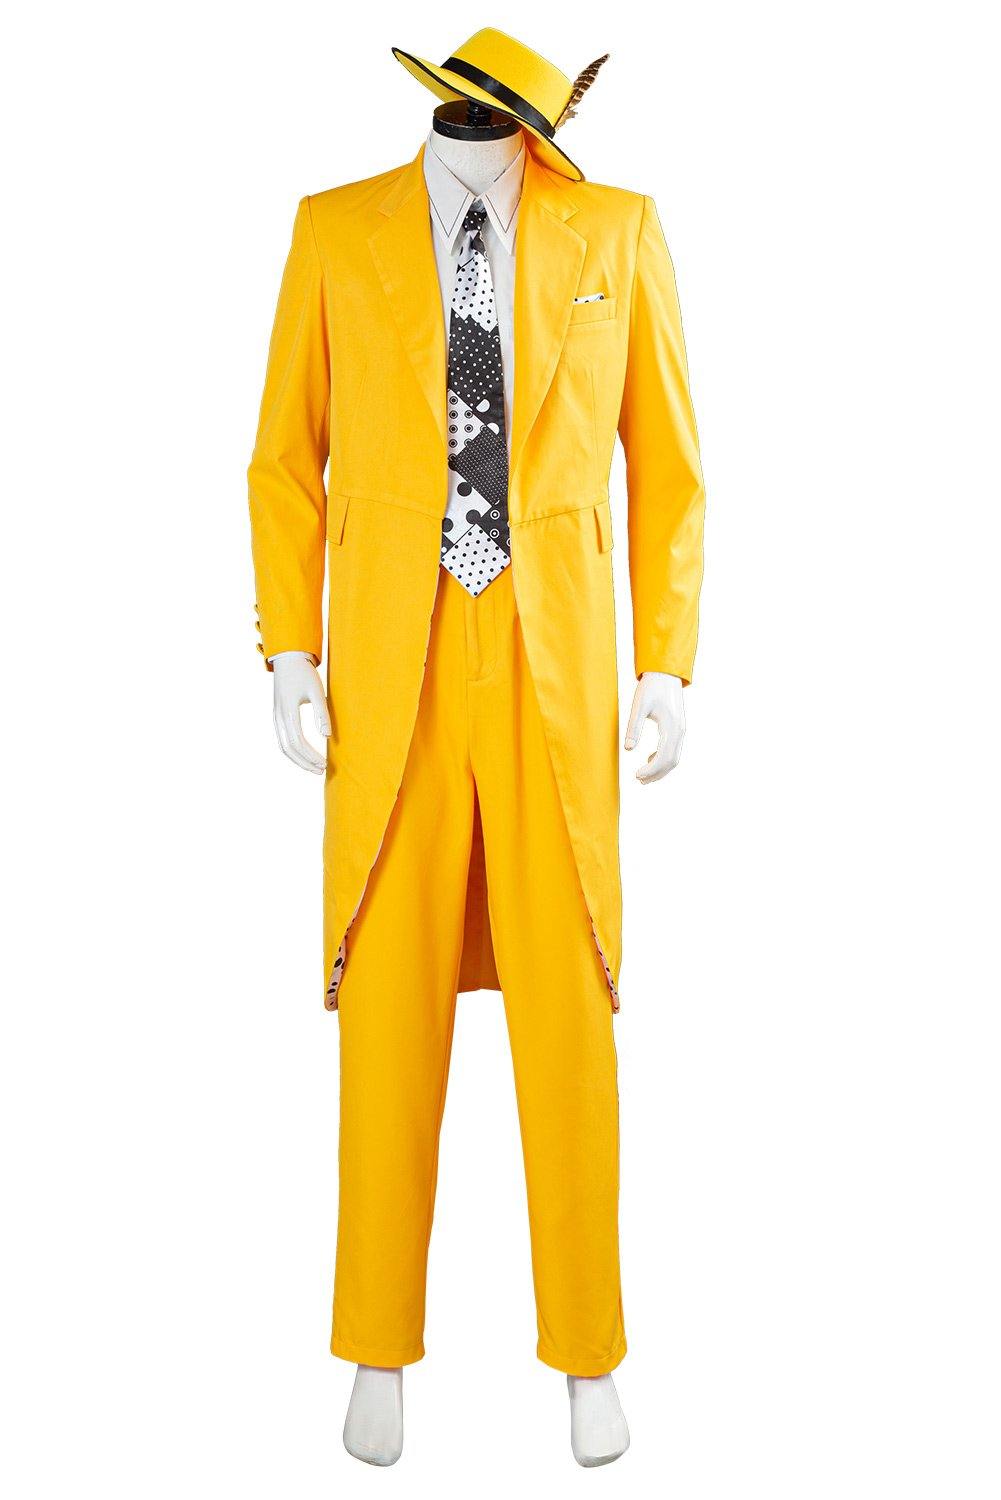 Jim Carrey Gelb Anzug Cosplay Kostüm Uniform Halloween Karneval Kostüm - cosplaycartde